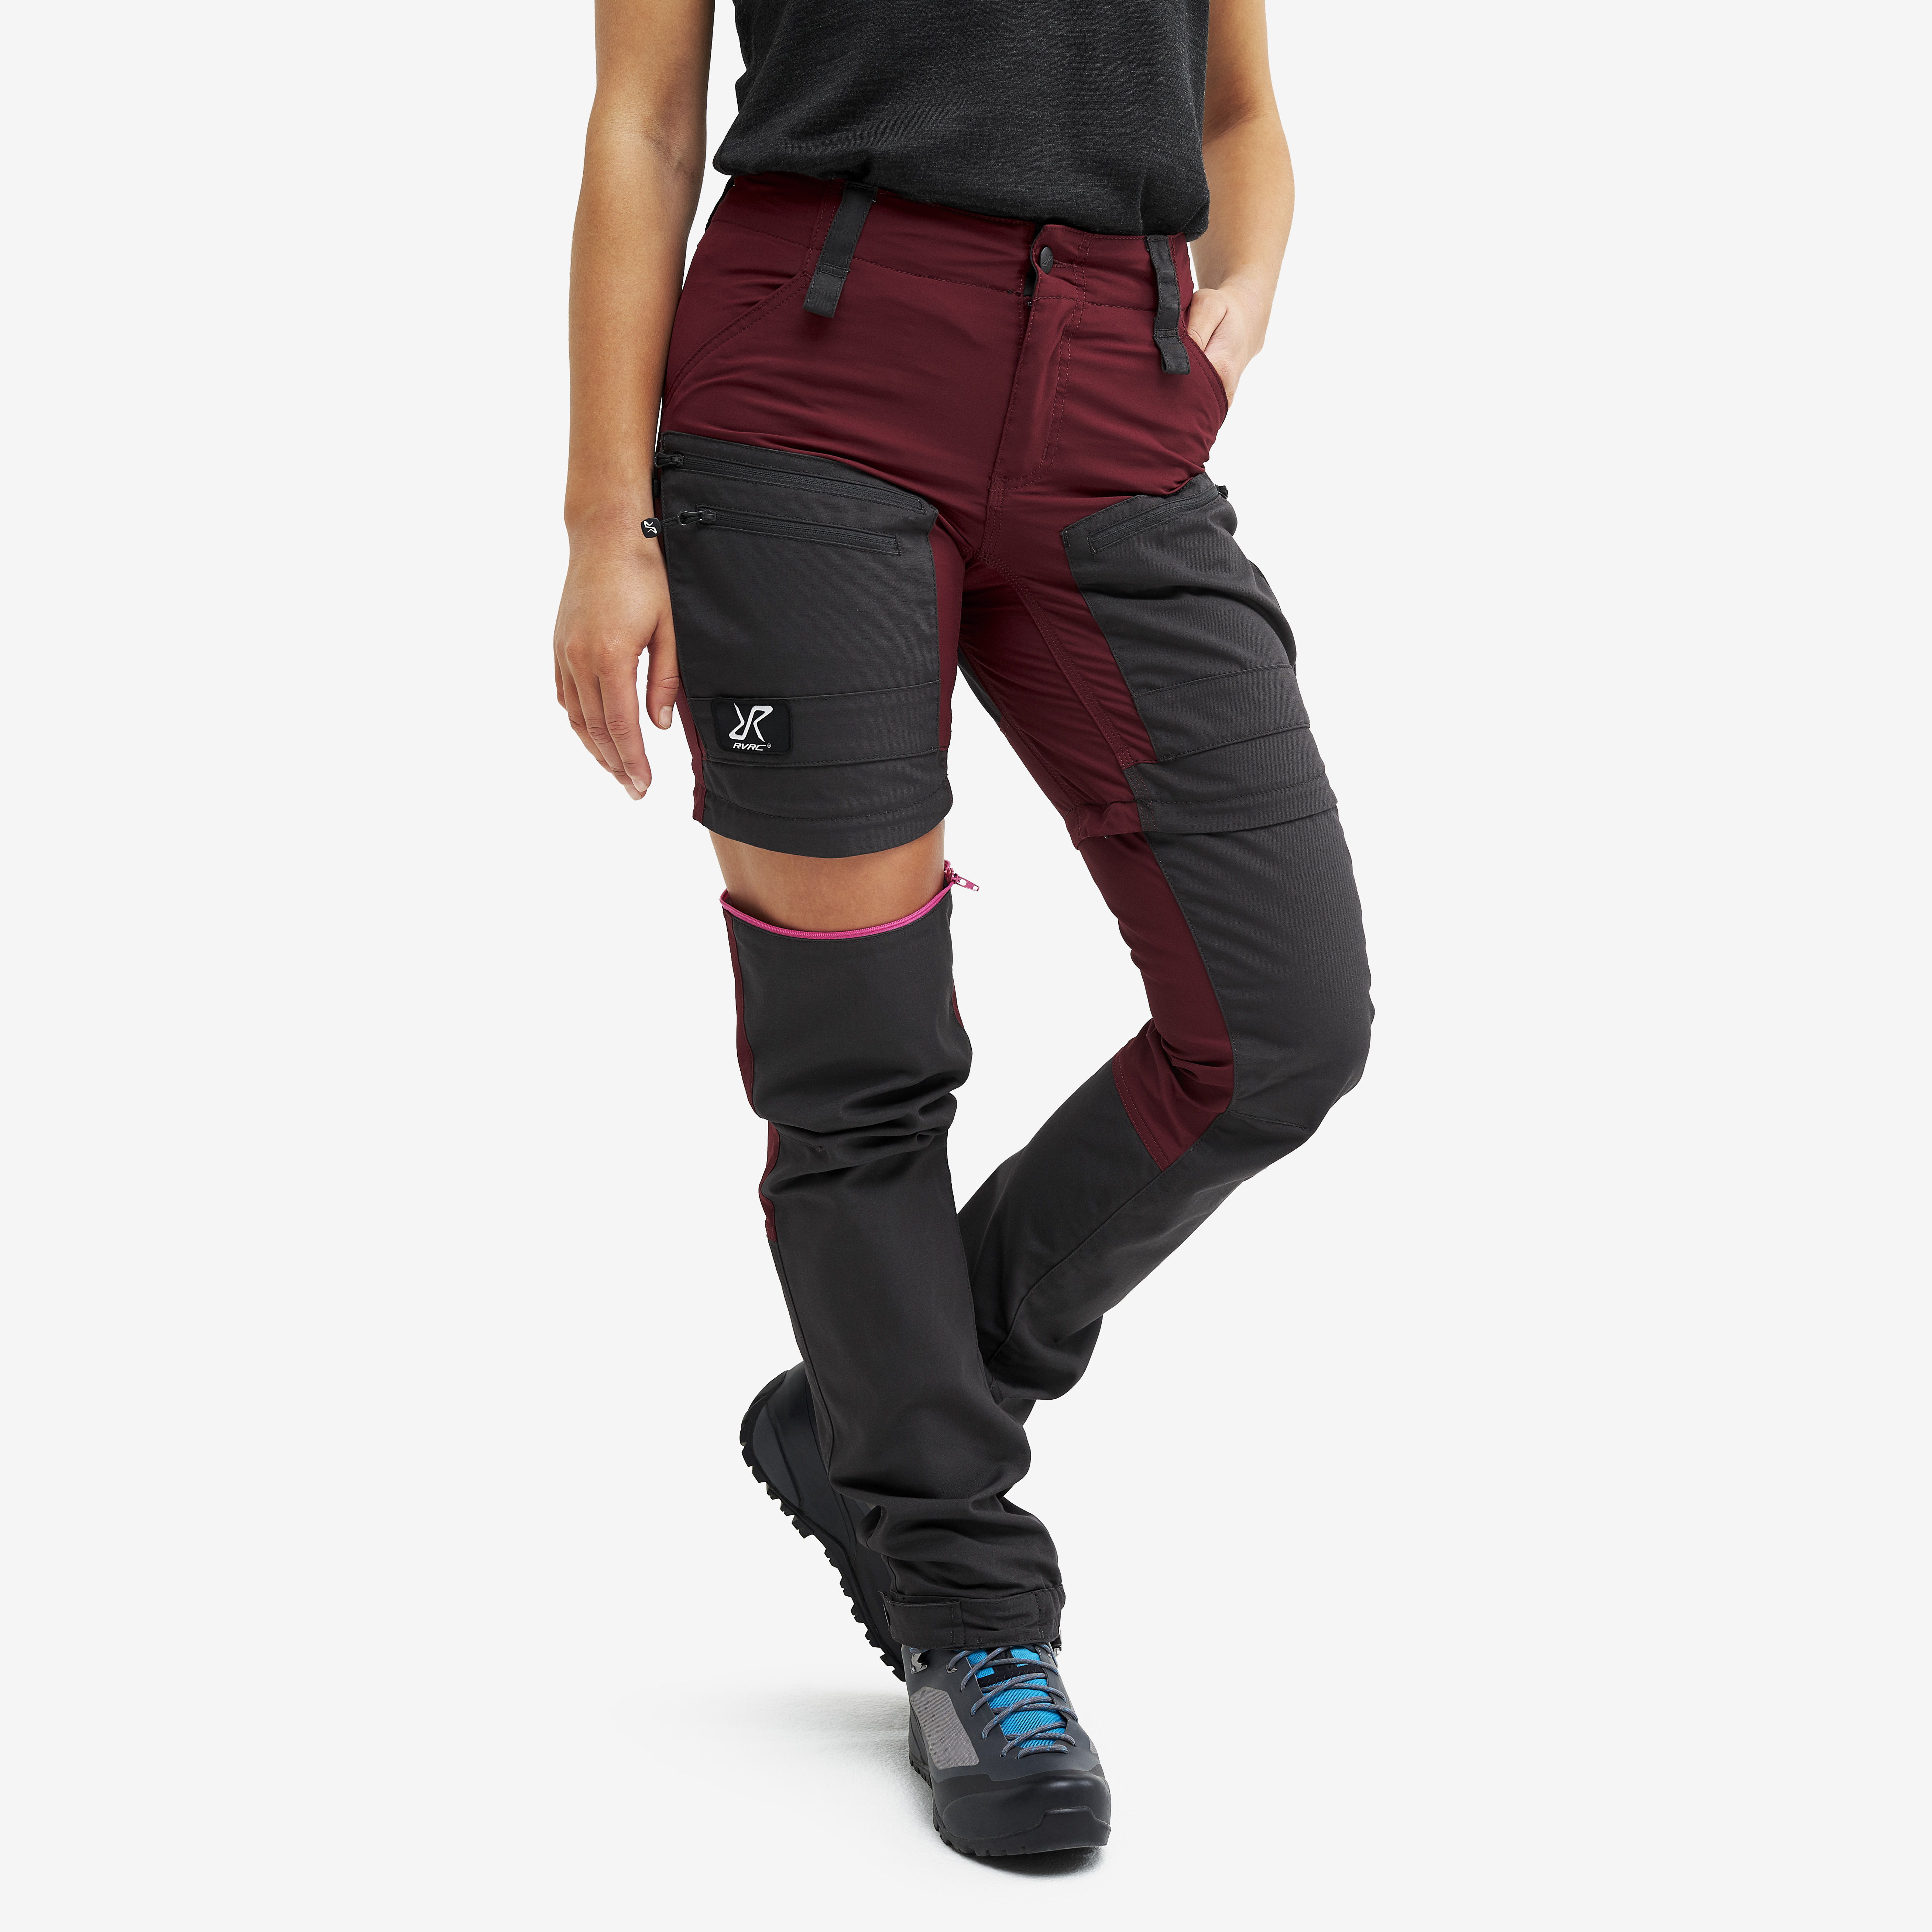 RVRC GP Pro Zip-off hiking trousers for men in dark red